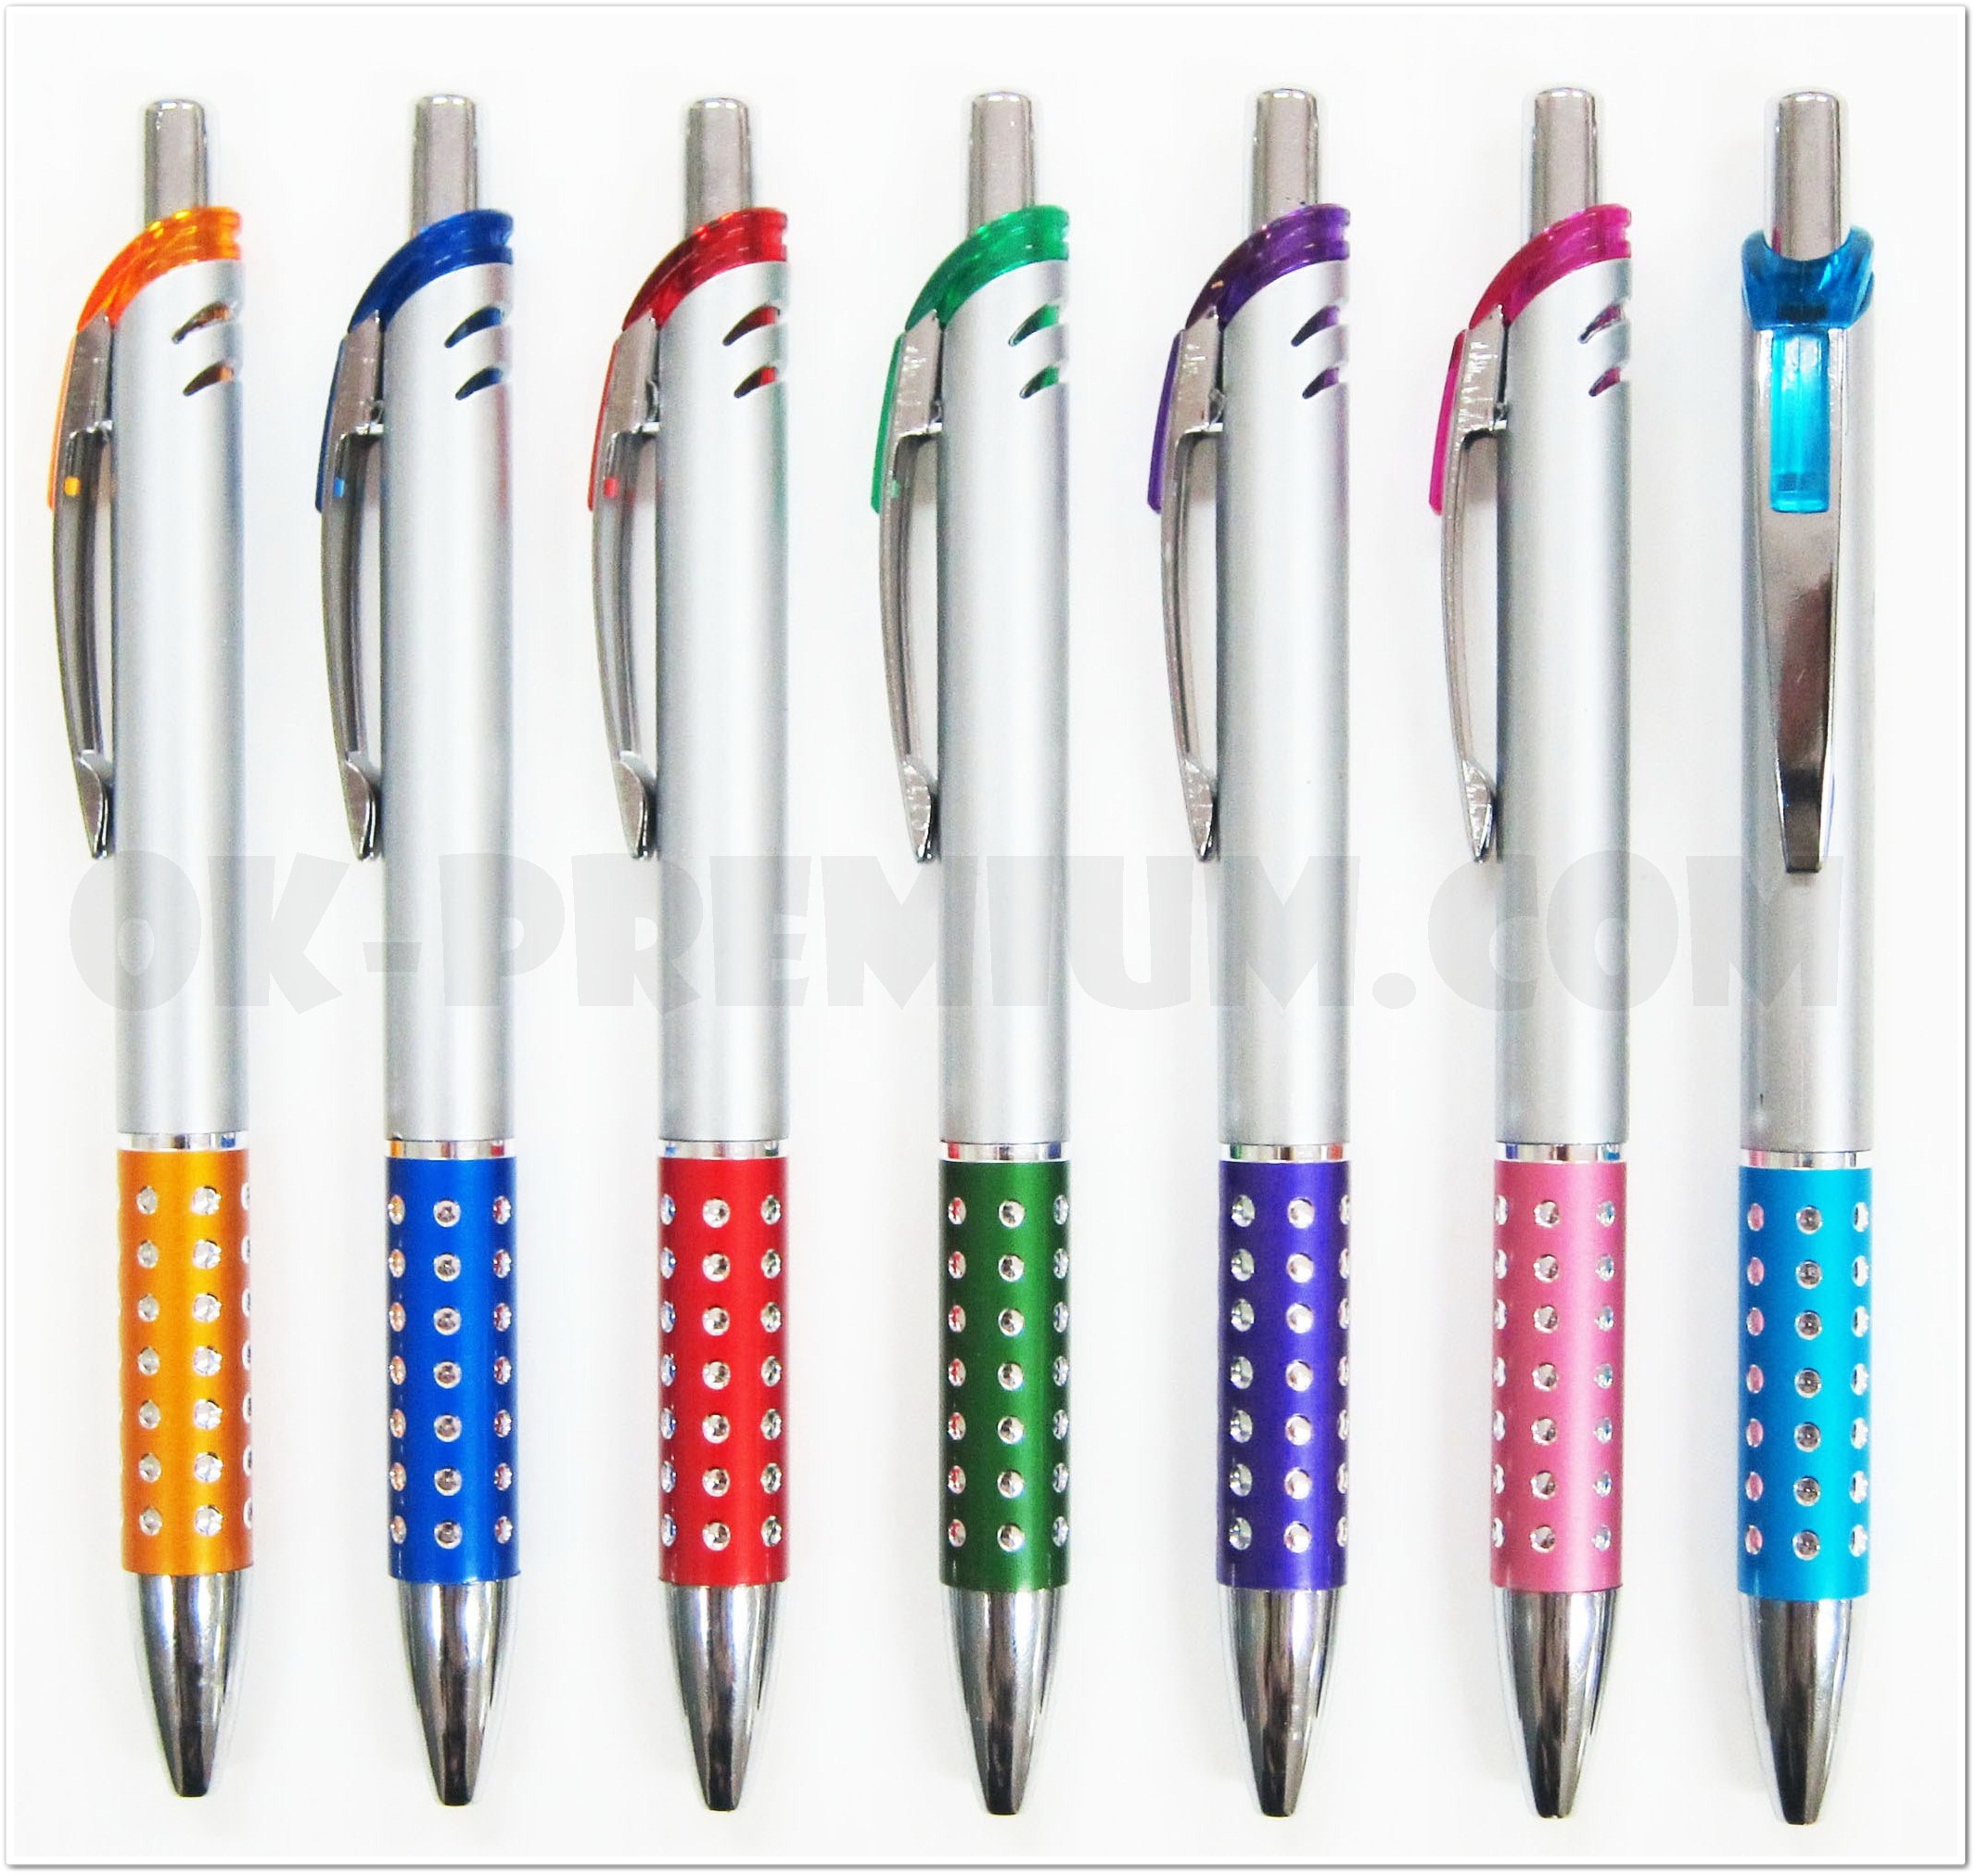 P258 ปากกาพลาสติก ปากกาดูดี ปากกา ปากกาพรีเมี่ยม ปากกาคล้องคอ พร้อมสกรีน สกรีนฟรี ของพรีเมี่ยม สินค้าพรีเมี่ยม ของนำเข้า สินค้านำเข้า ของแจก ของแถม ของชำร่วย มีให้เลือกหลายแบบค่ะ